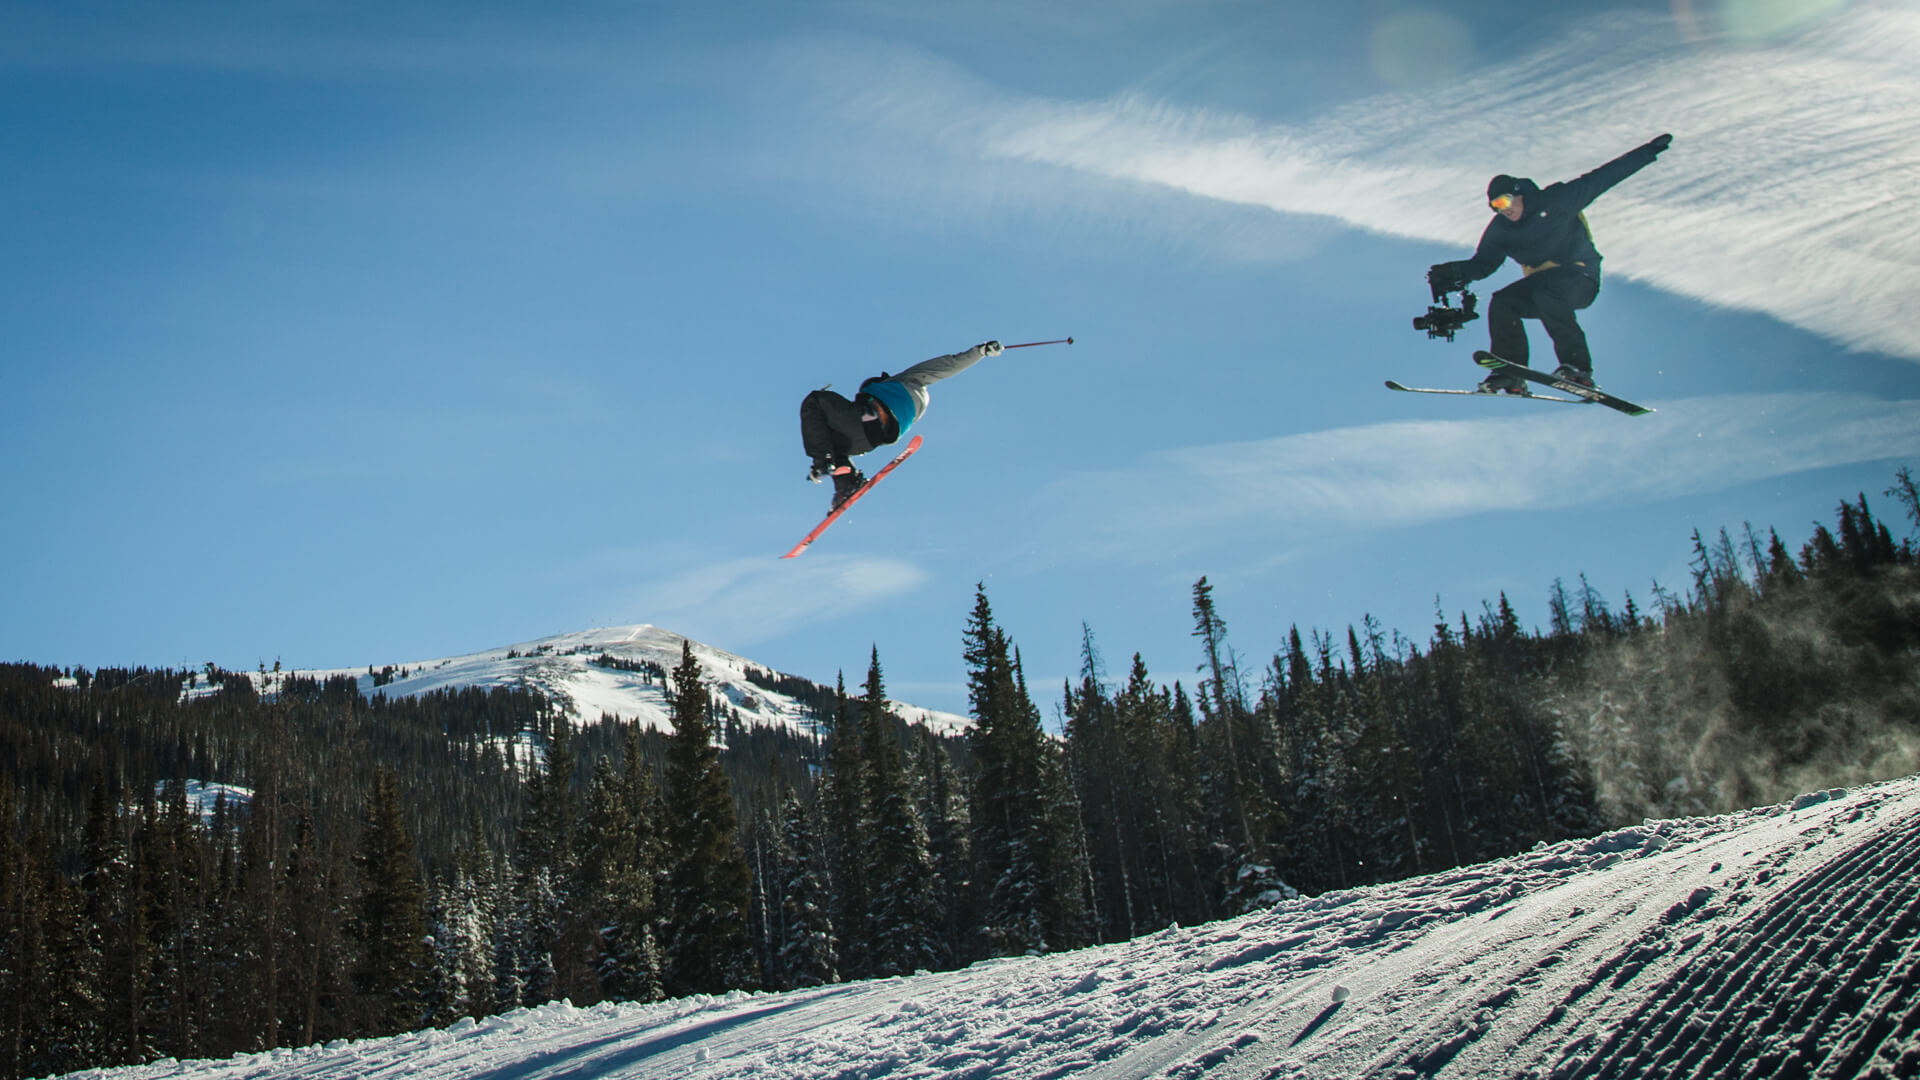 MoVI Operator Sam Nuttmann - Colorado - Red Bull Moments - Kirk Bereska follow skiier